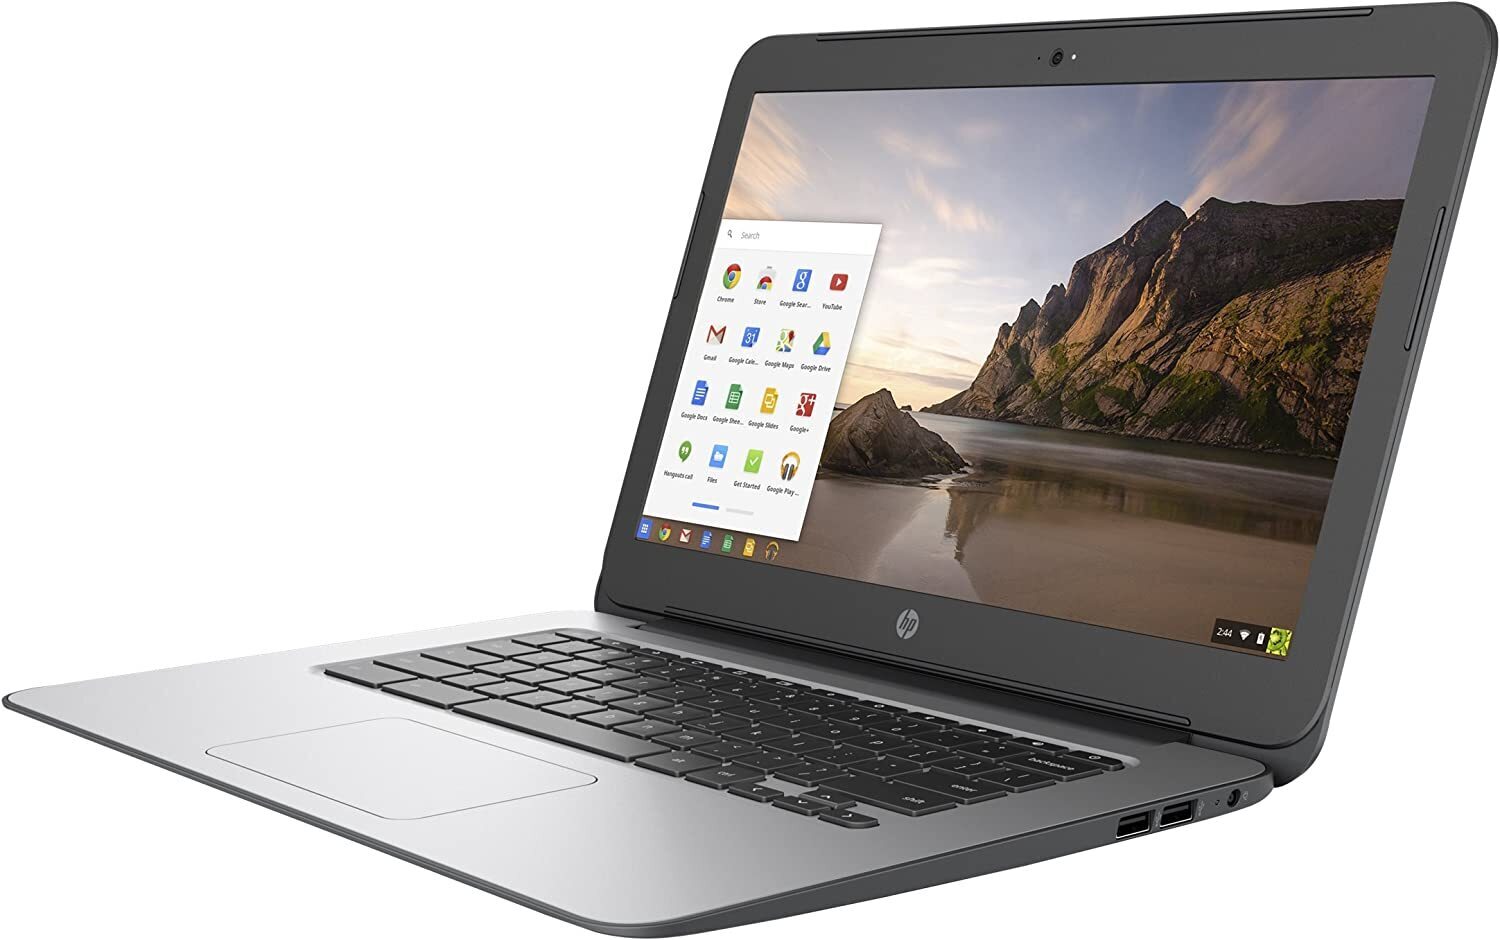 HP Chromebook 14 G4 N2940 1.83Ghz 2GB RAM 32GB 14" HD Chrome OS - B Grade Image 1